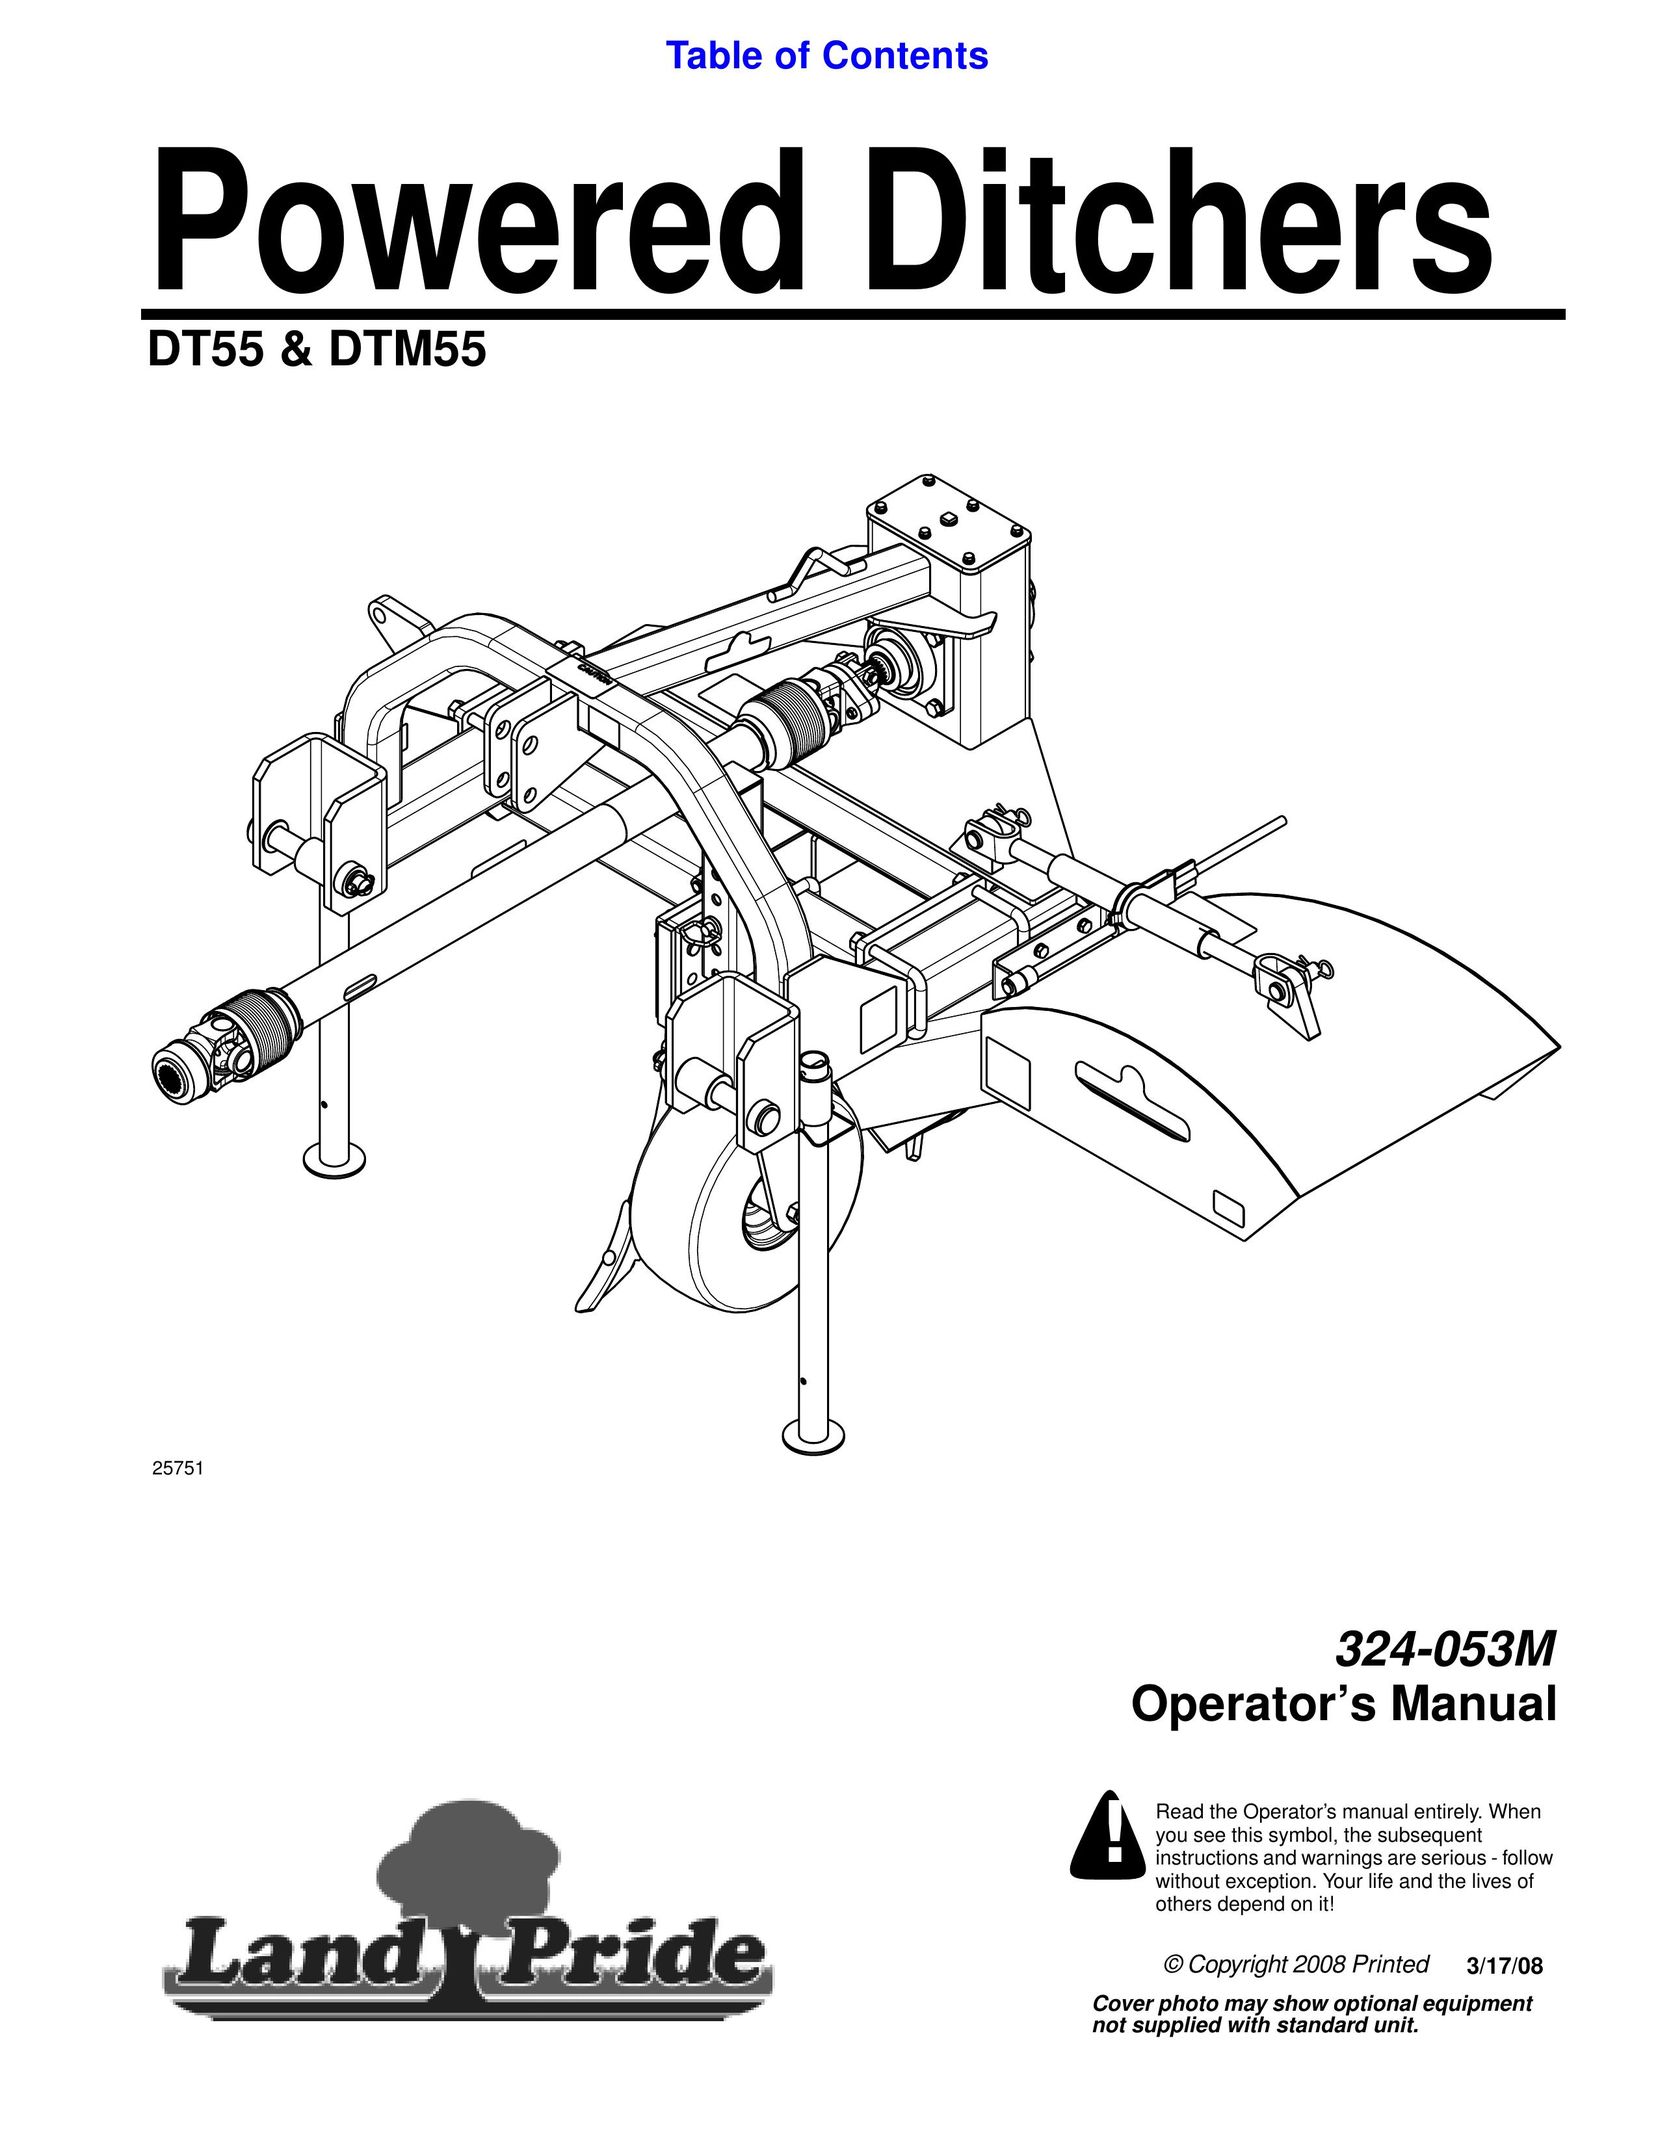 Land Pride DT55 Power Screwdriver User Manual